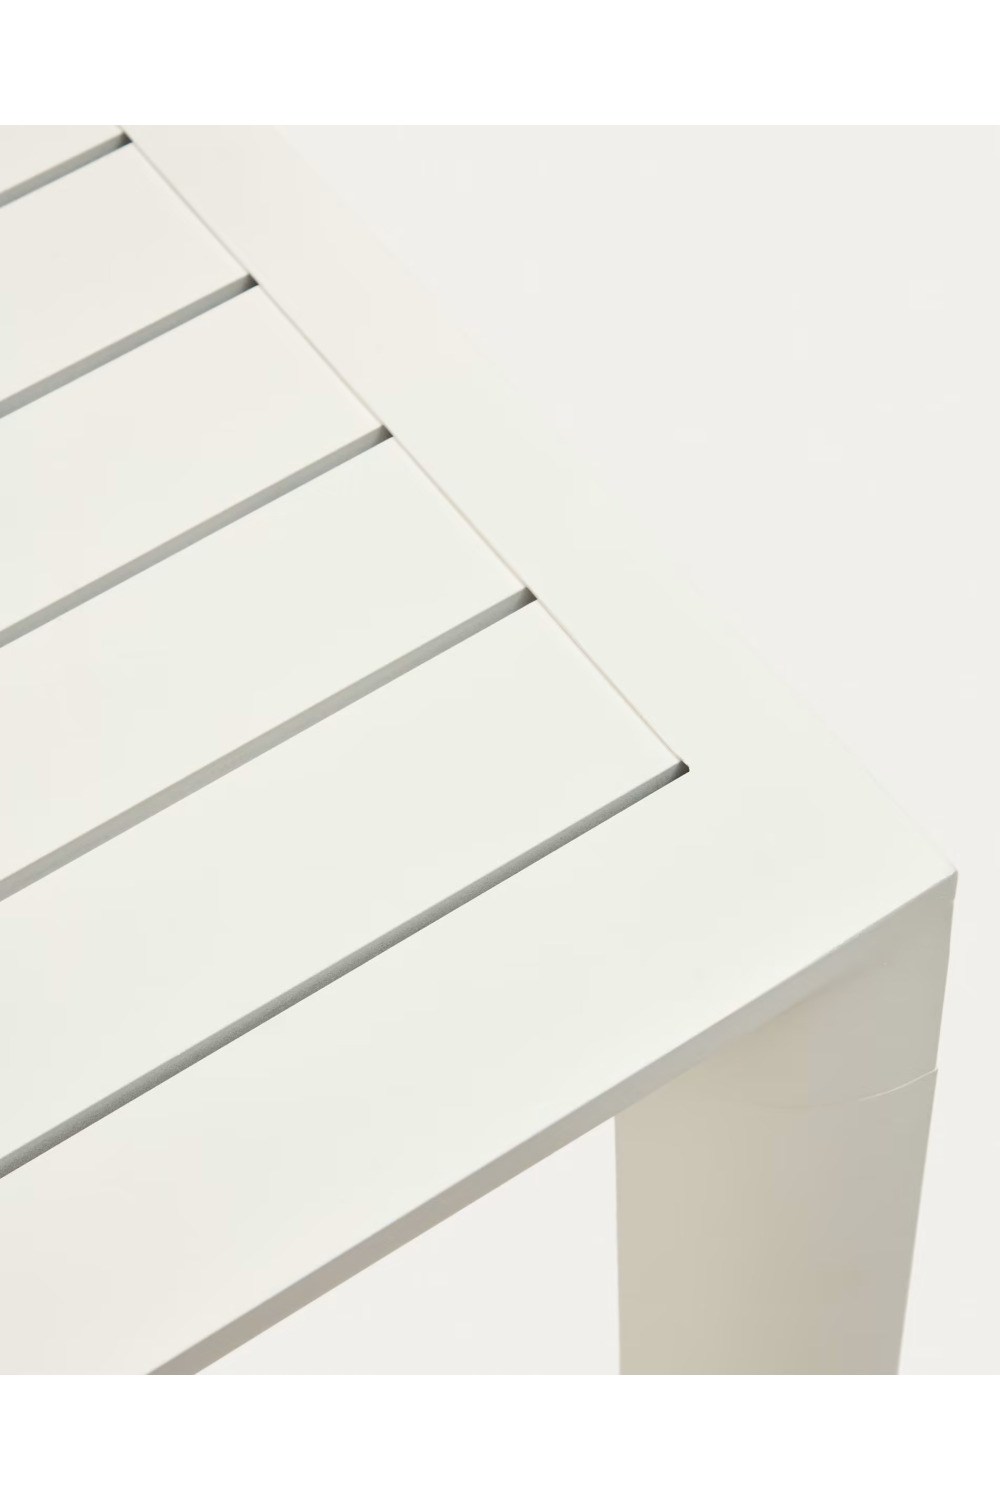 White Aluminum Outdoor Table | La Forma Culip | Oroa.com